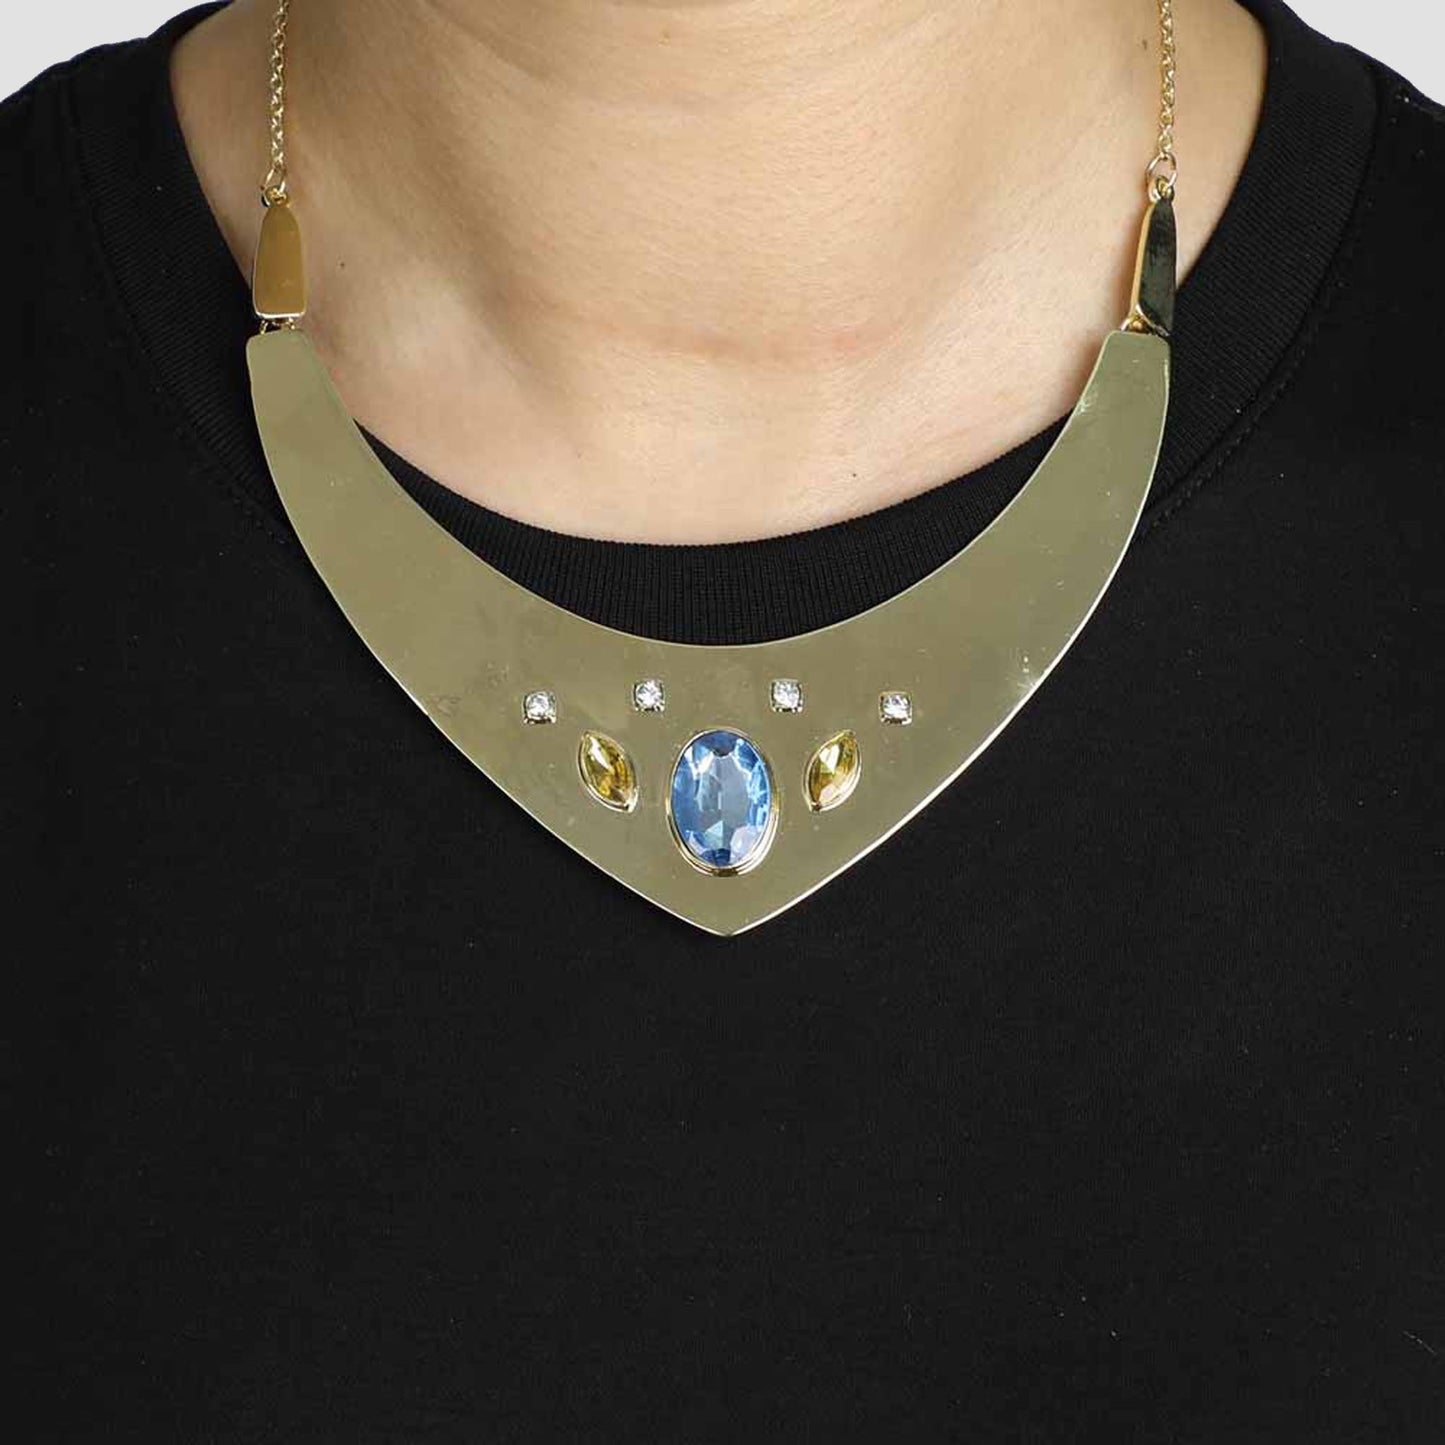 Jasmine Tiara, Earrings, and Necklace Set